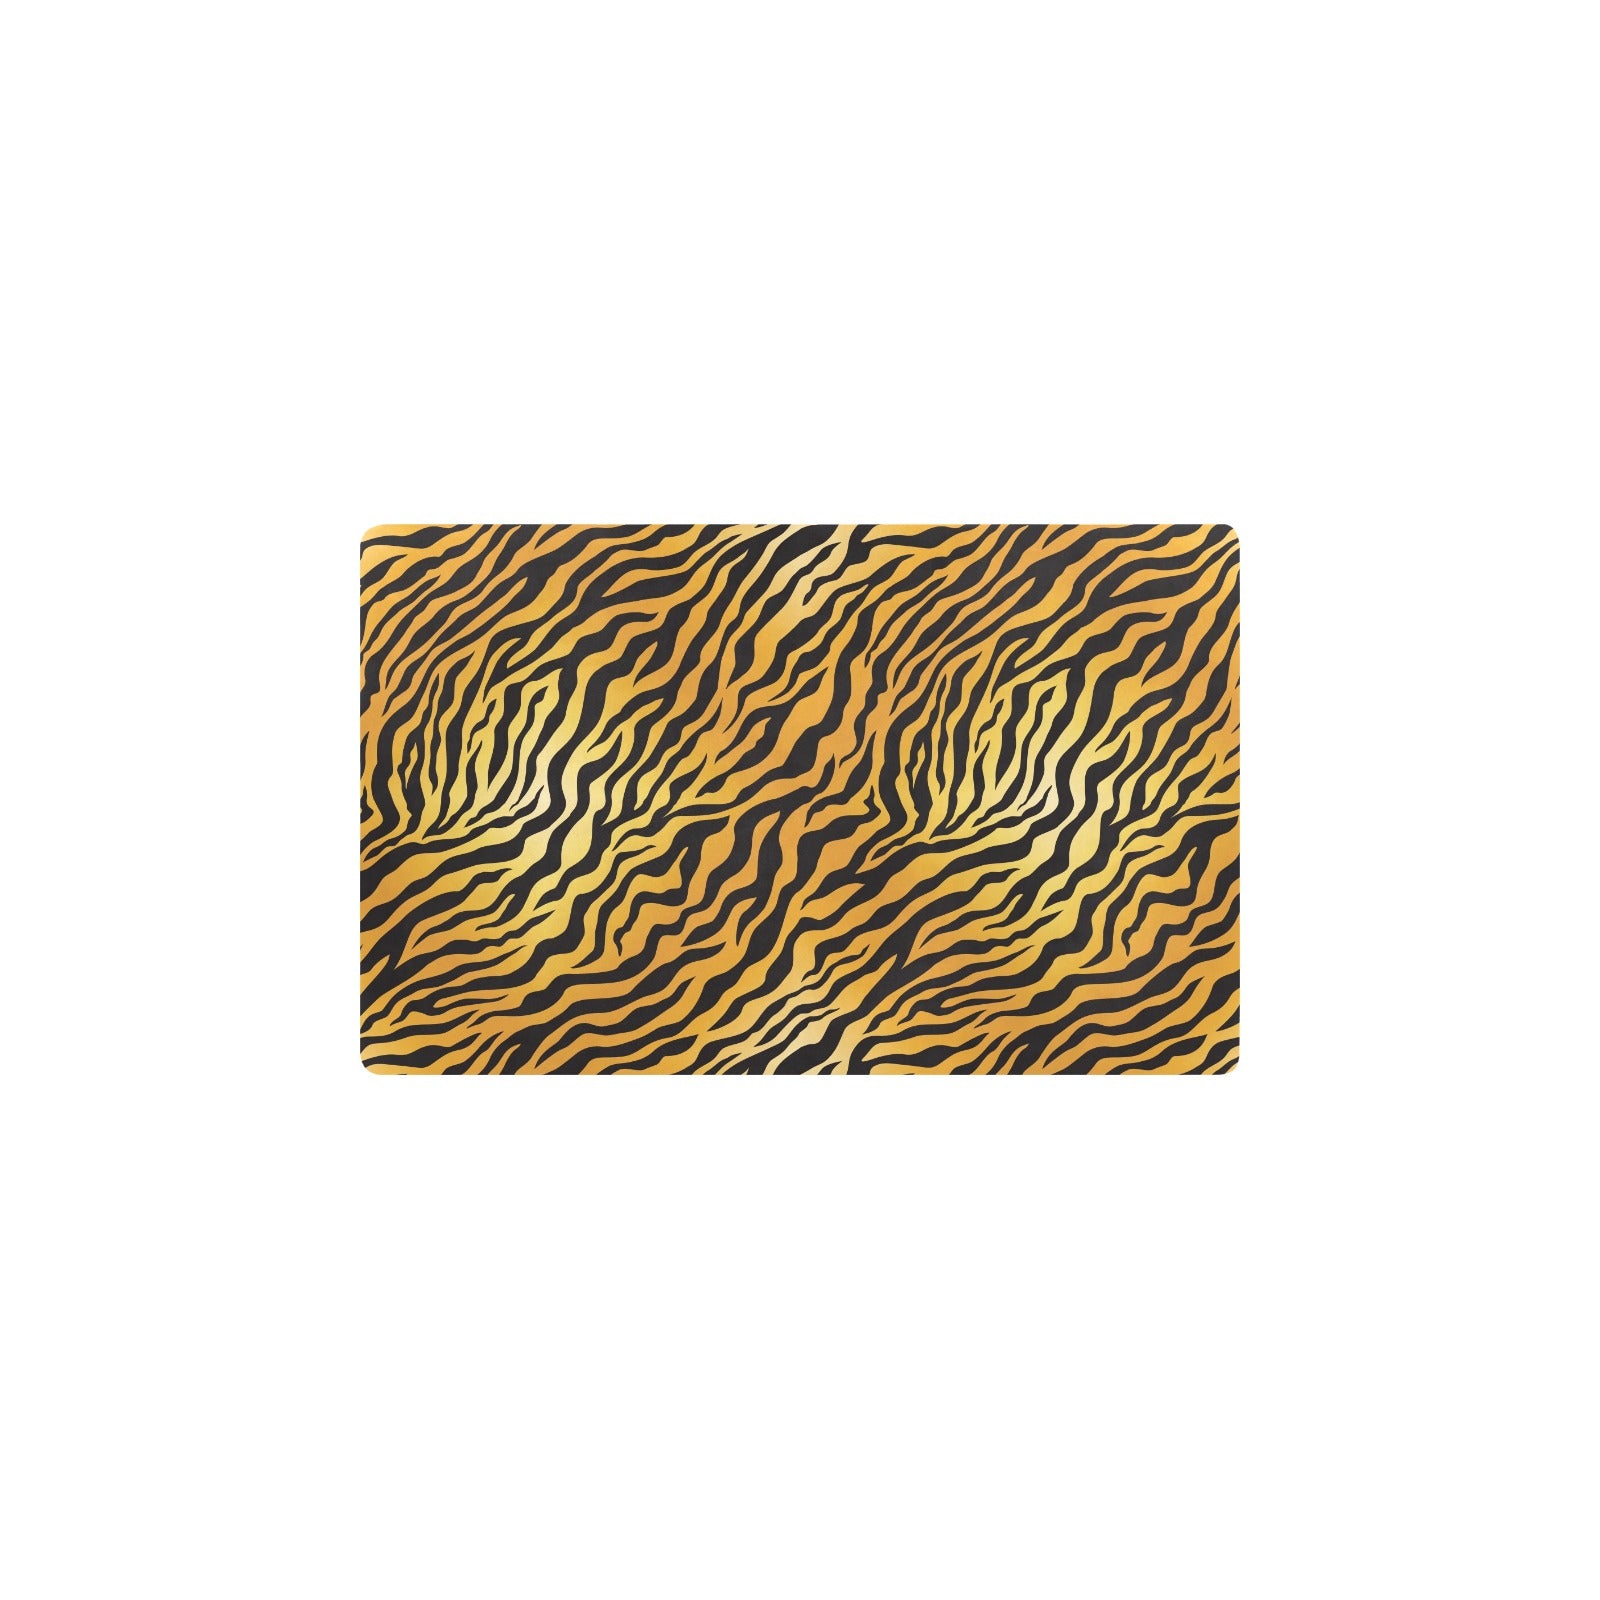 Tiger Print Design LKS302 Kitchen Mat